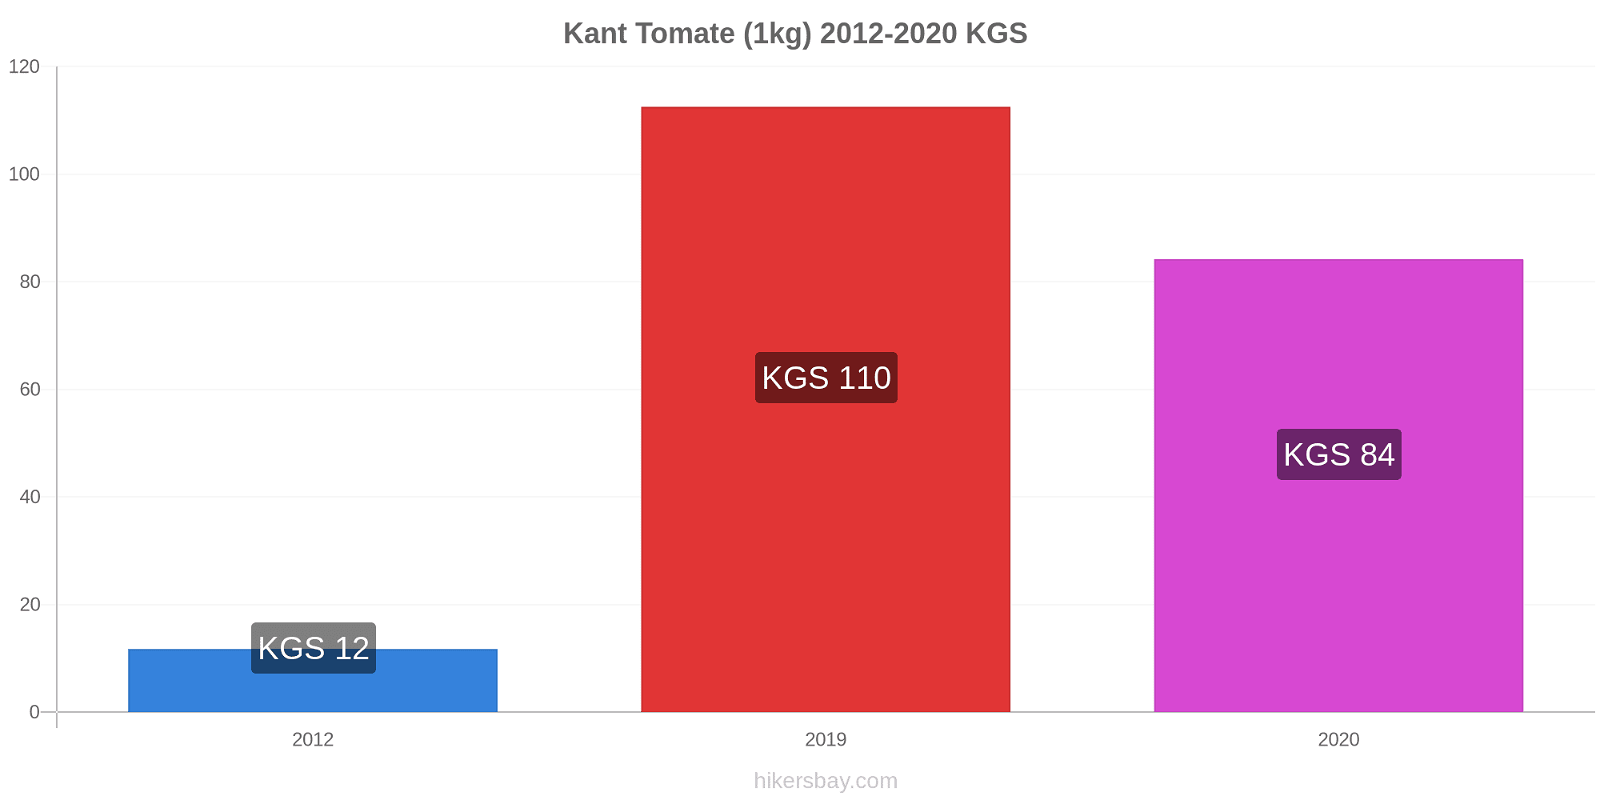 Kant changements de prix Tomate (1kg) hikersbay.com